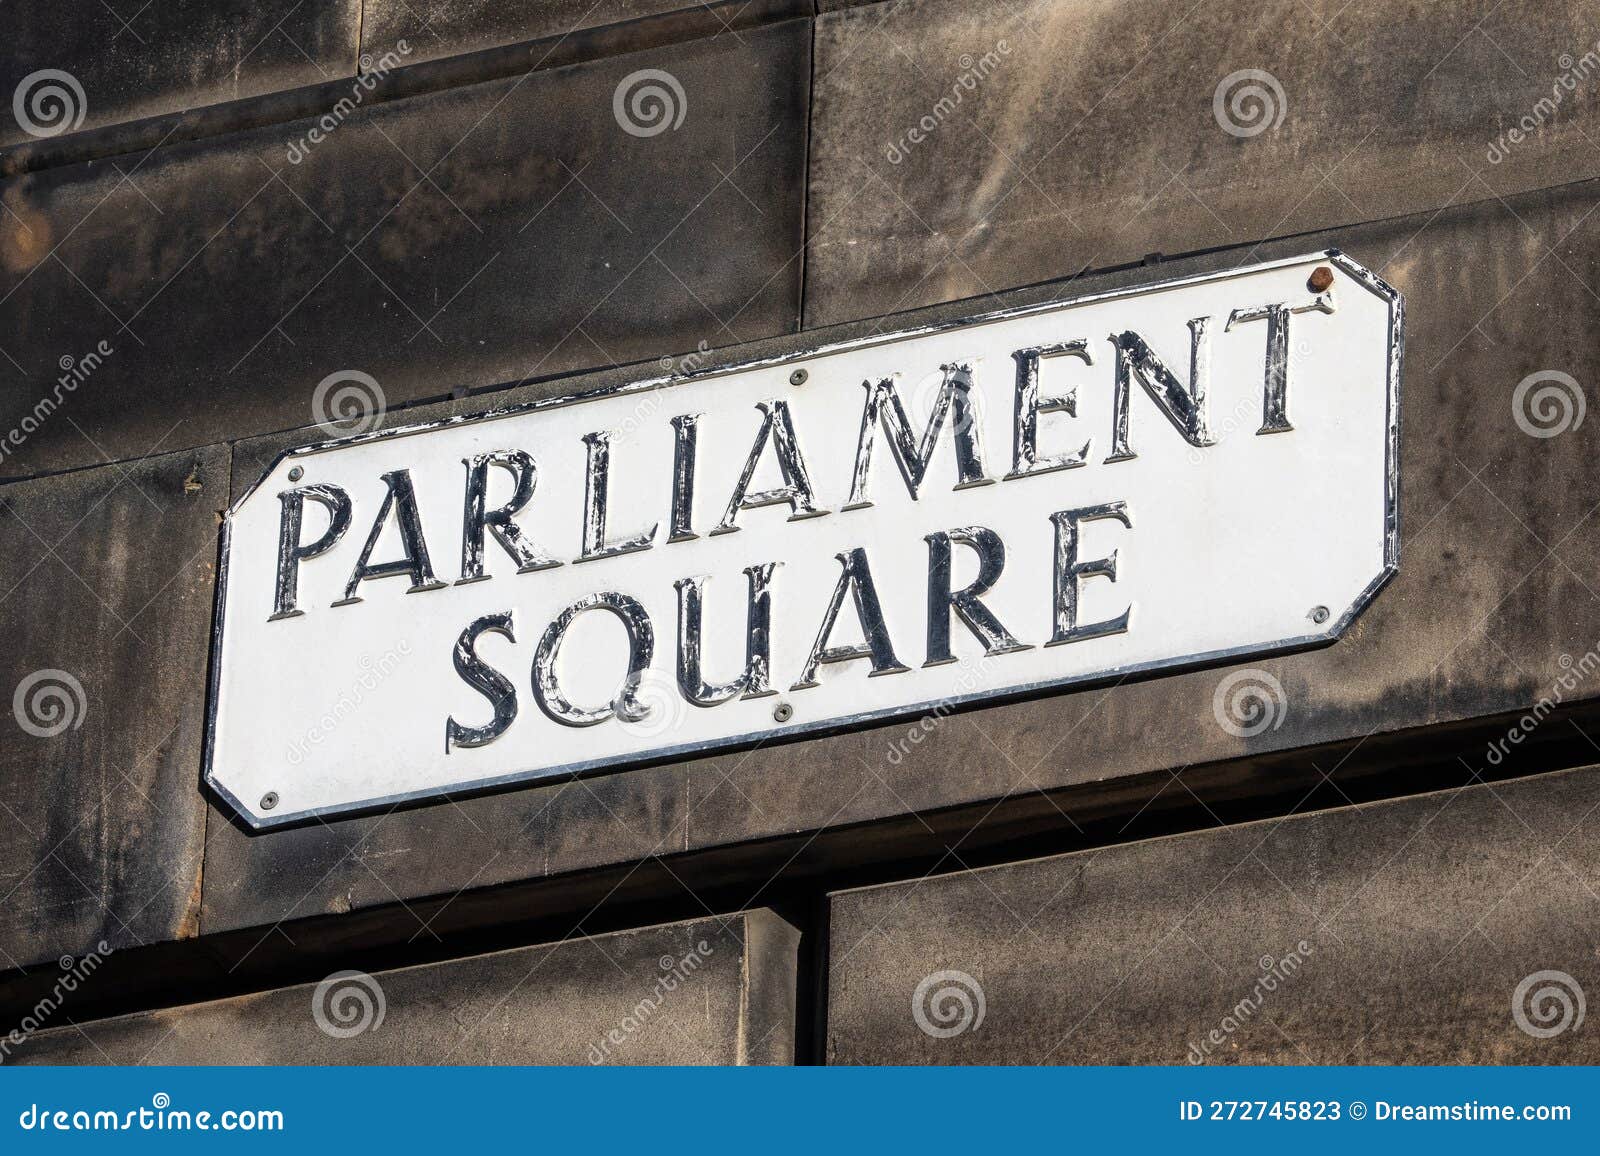 parliament square street sign in edinburgh, scotland